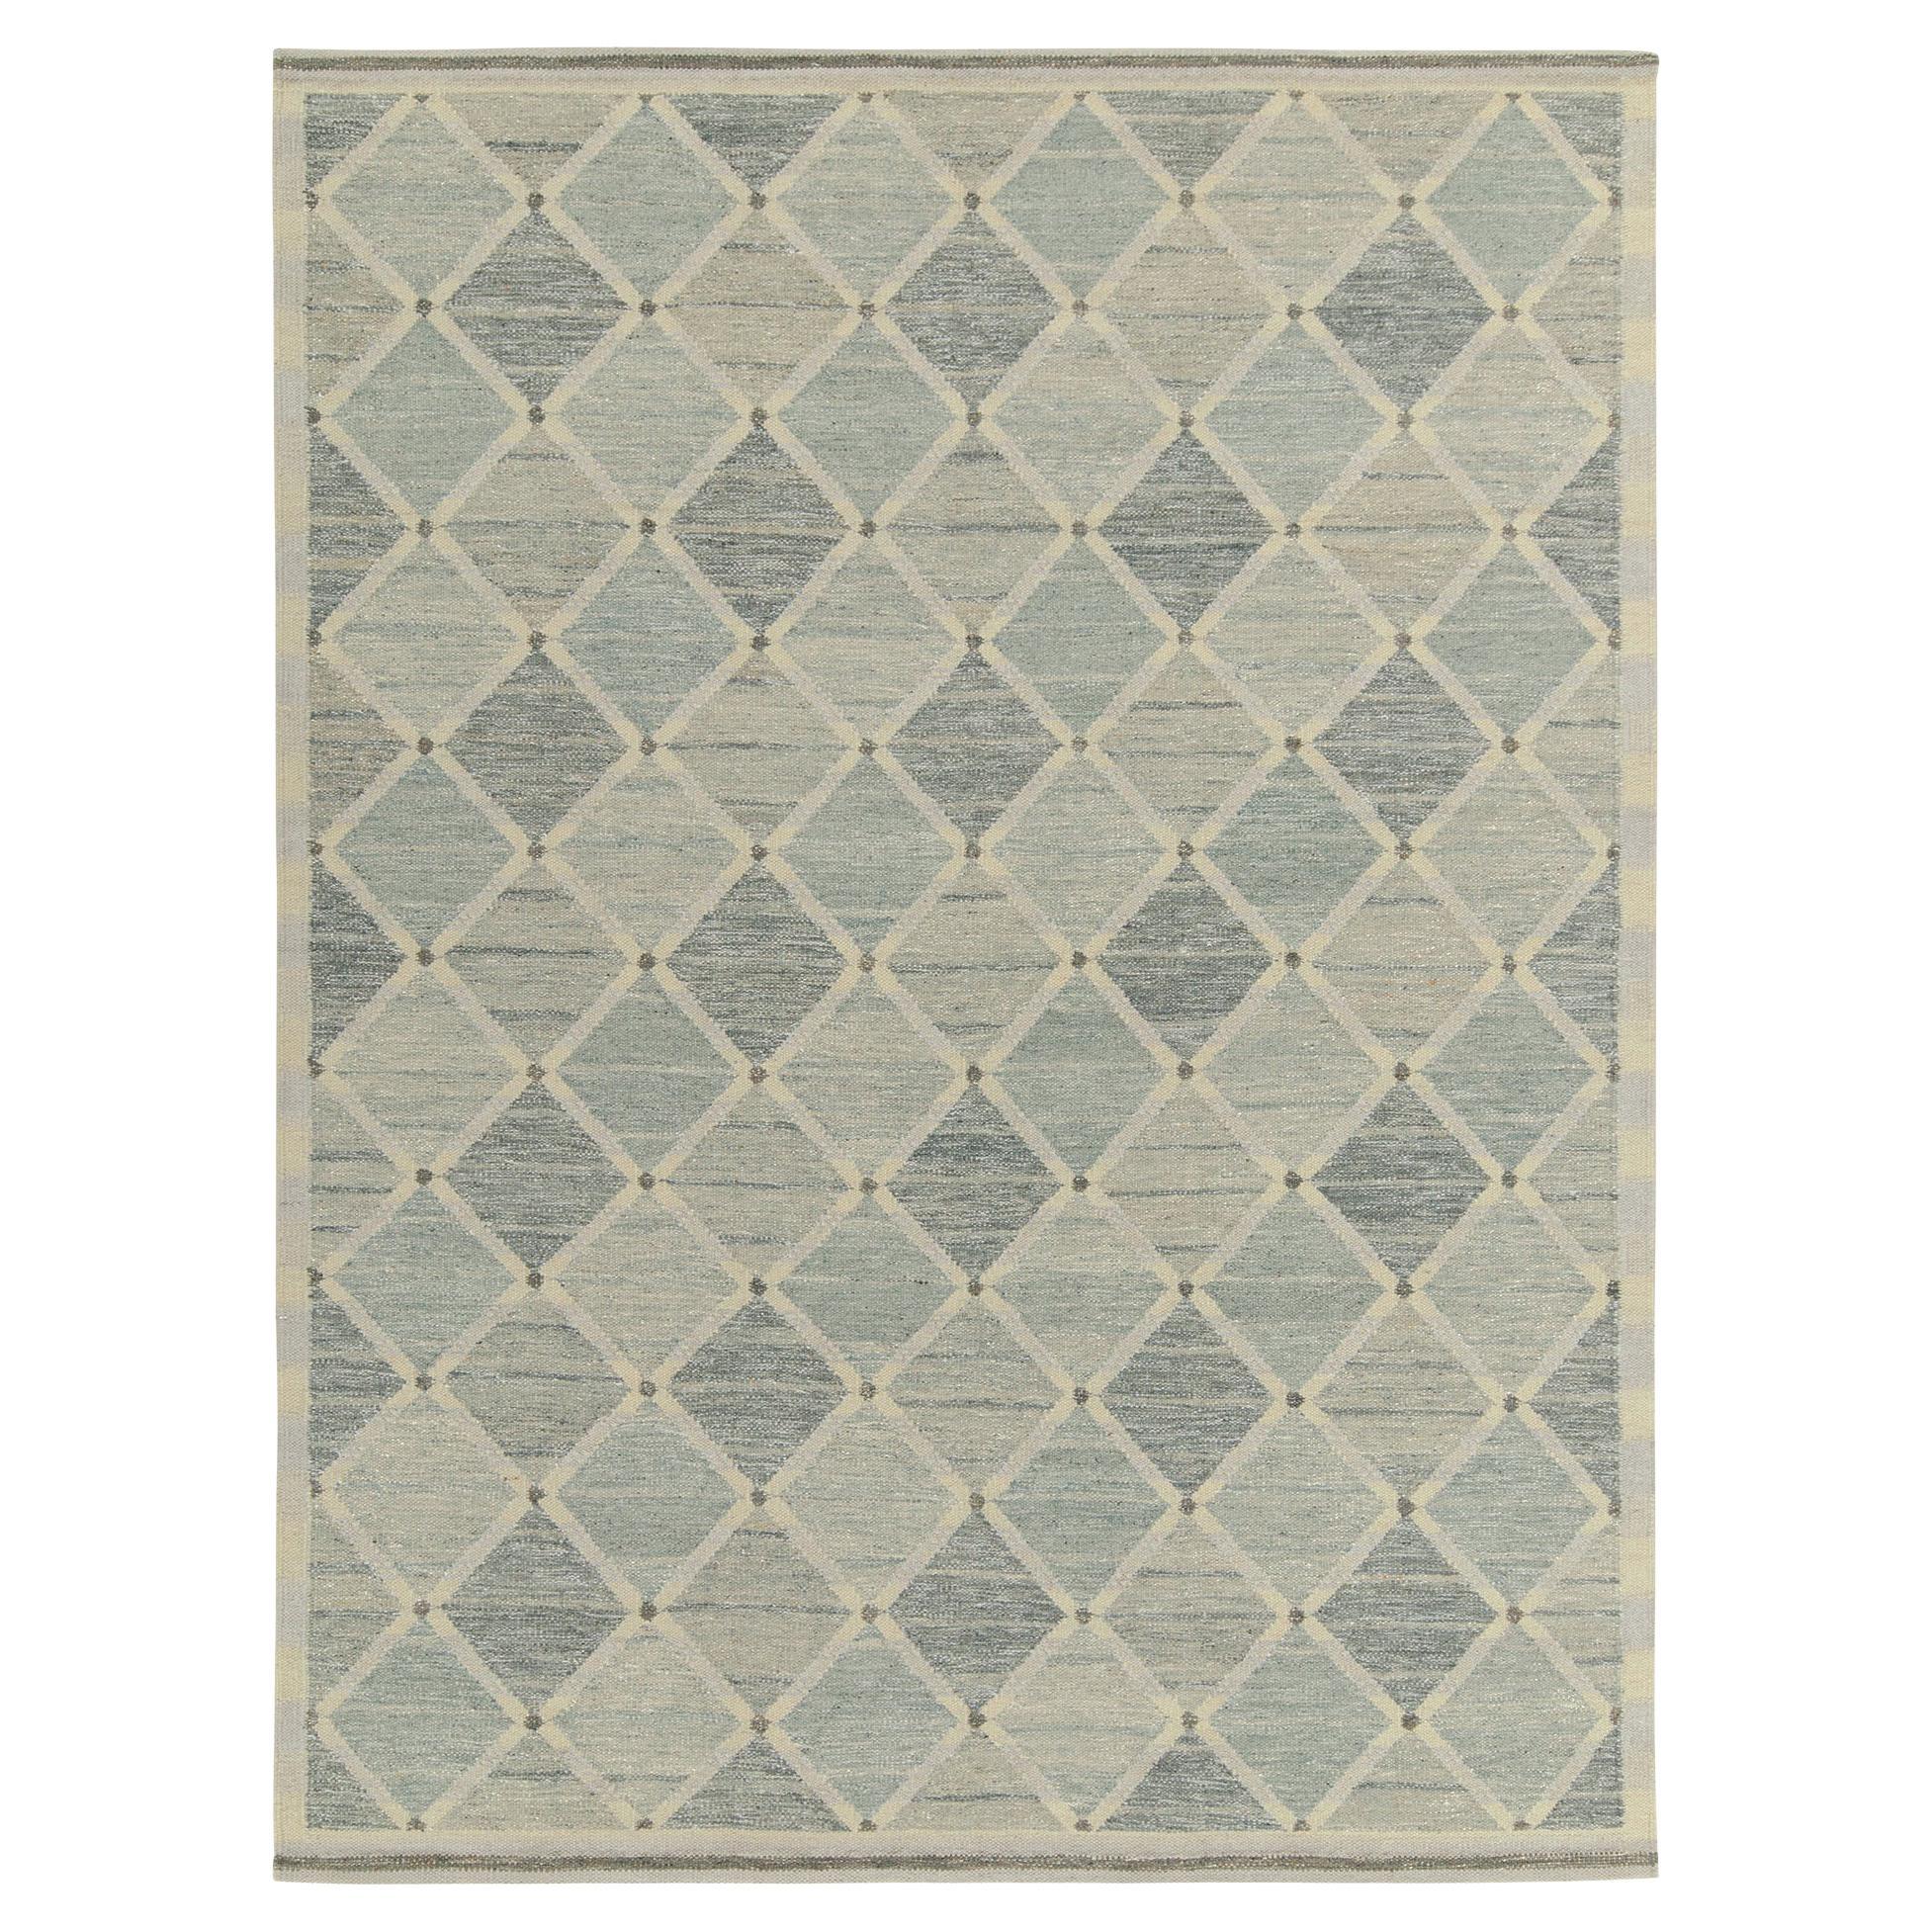 Rug & Kilim's Scandinavian Style Kilim Rug in Gray & Blue Geometric Pattern